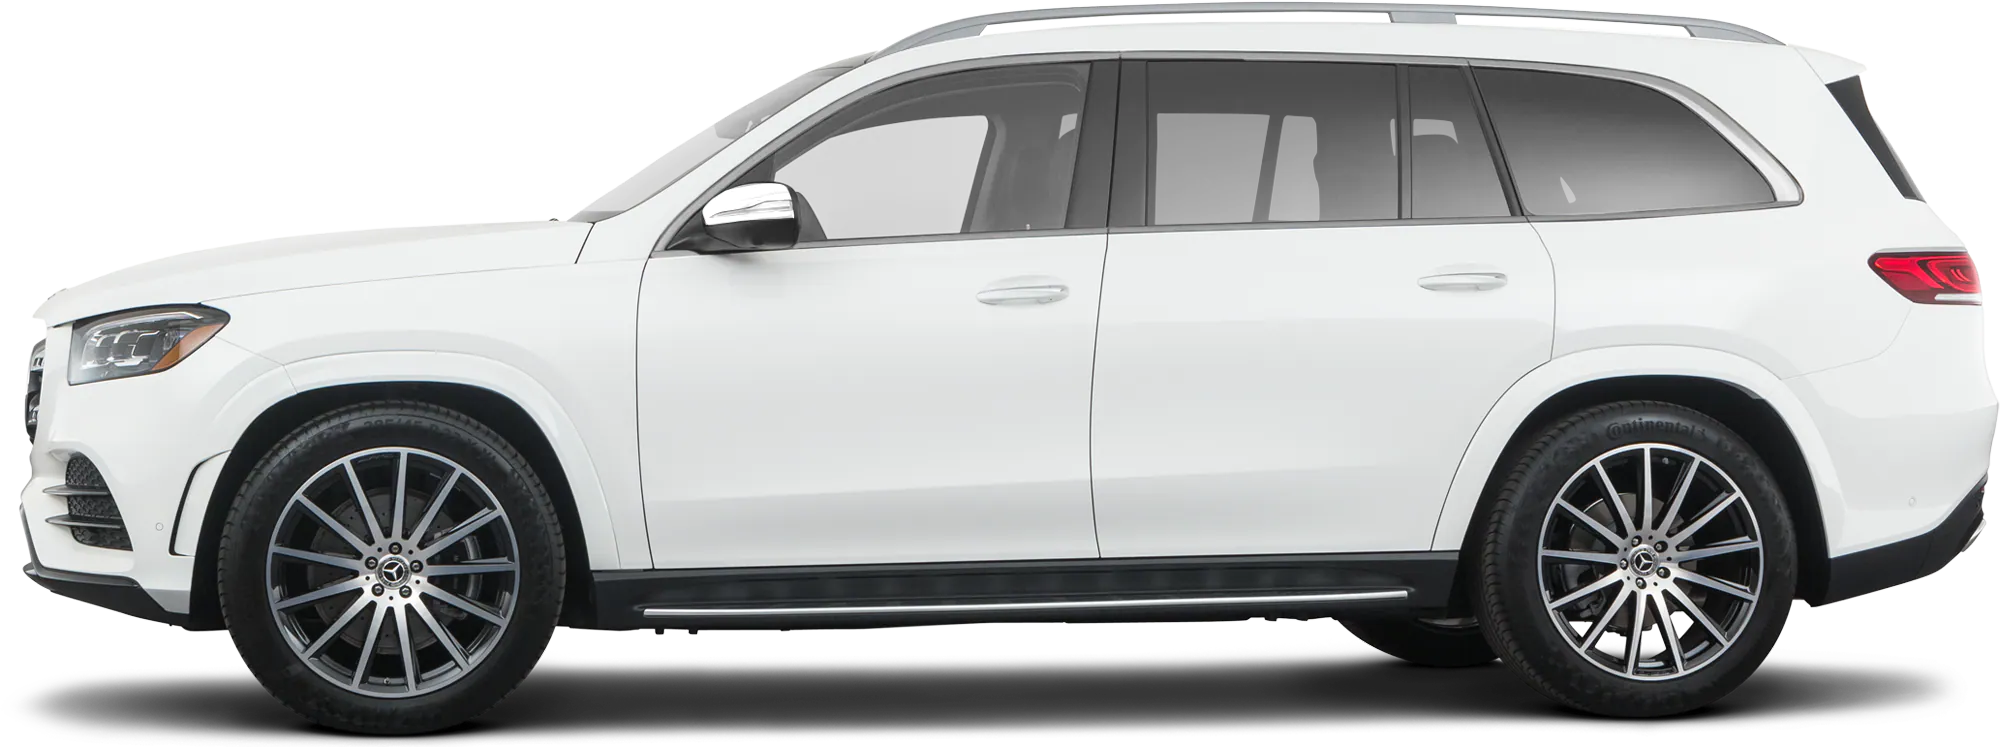 مرسيدس بنز GLS 500 exterior - Side Profile